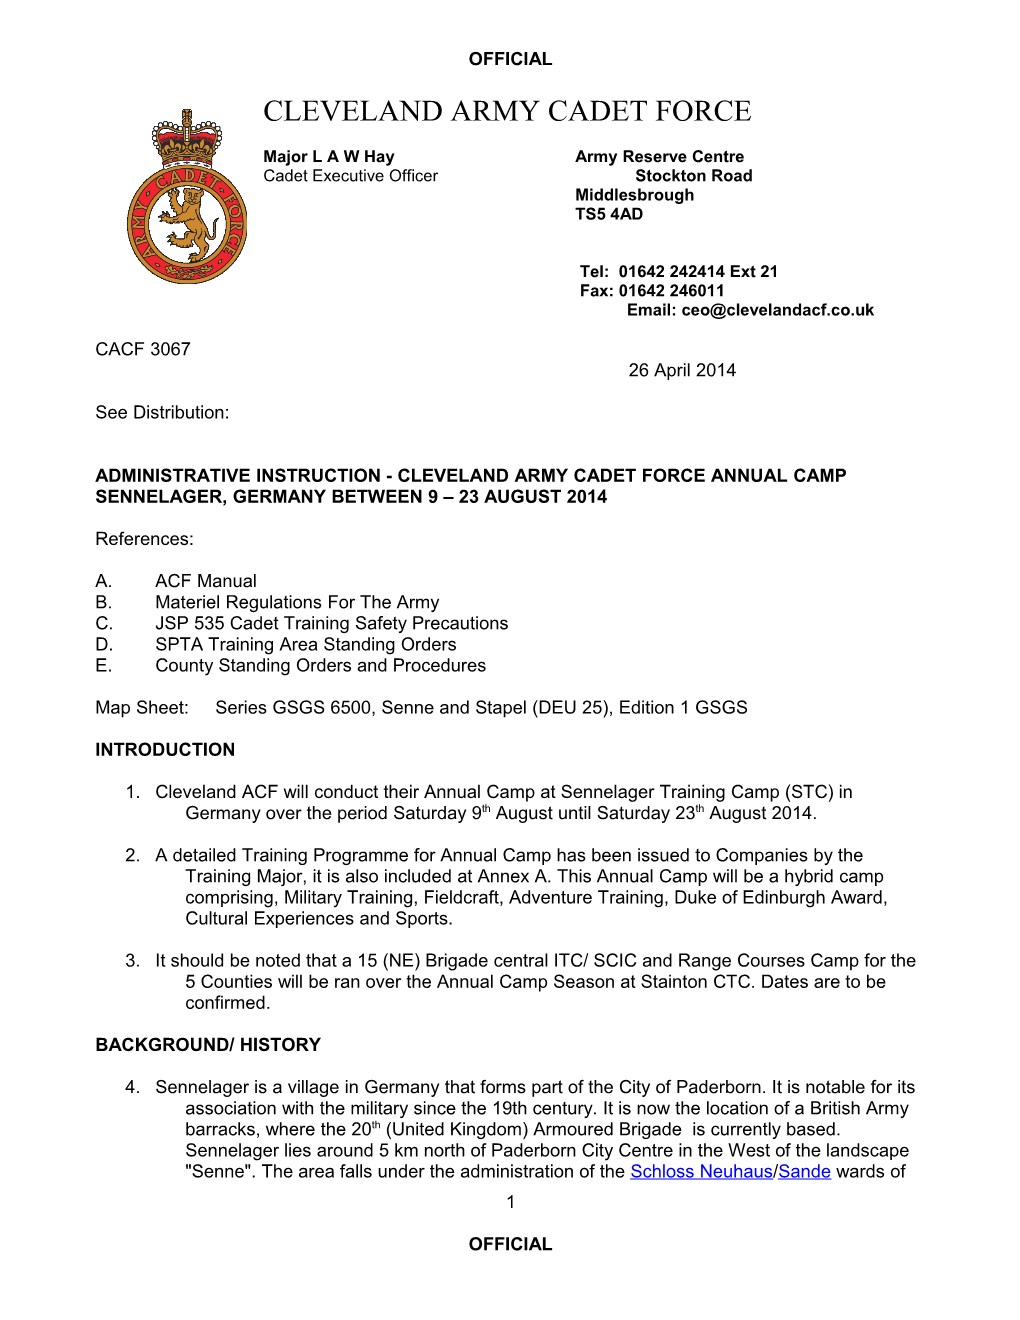 Durham Army Cadet Force Letterhead